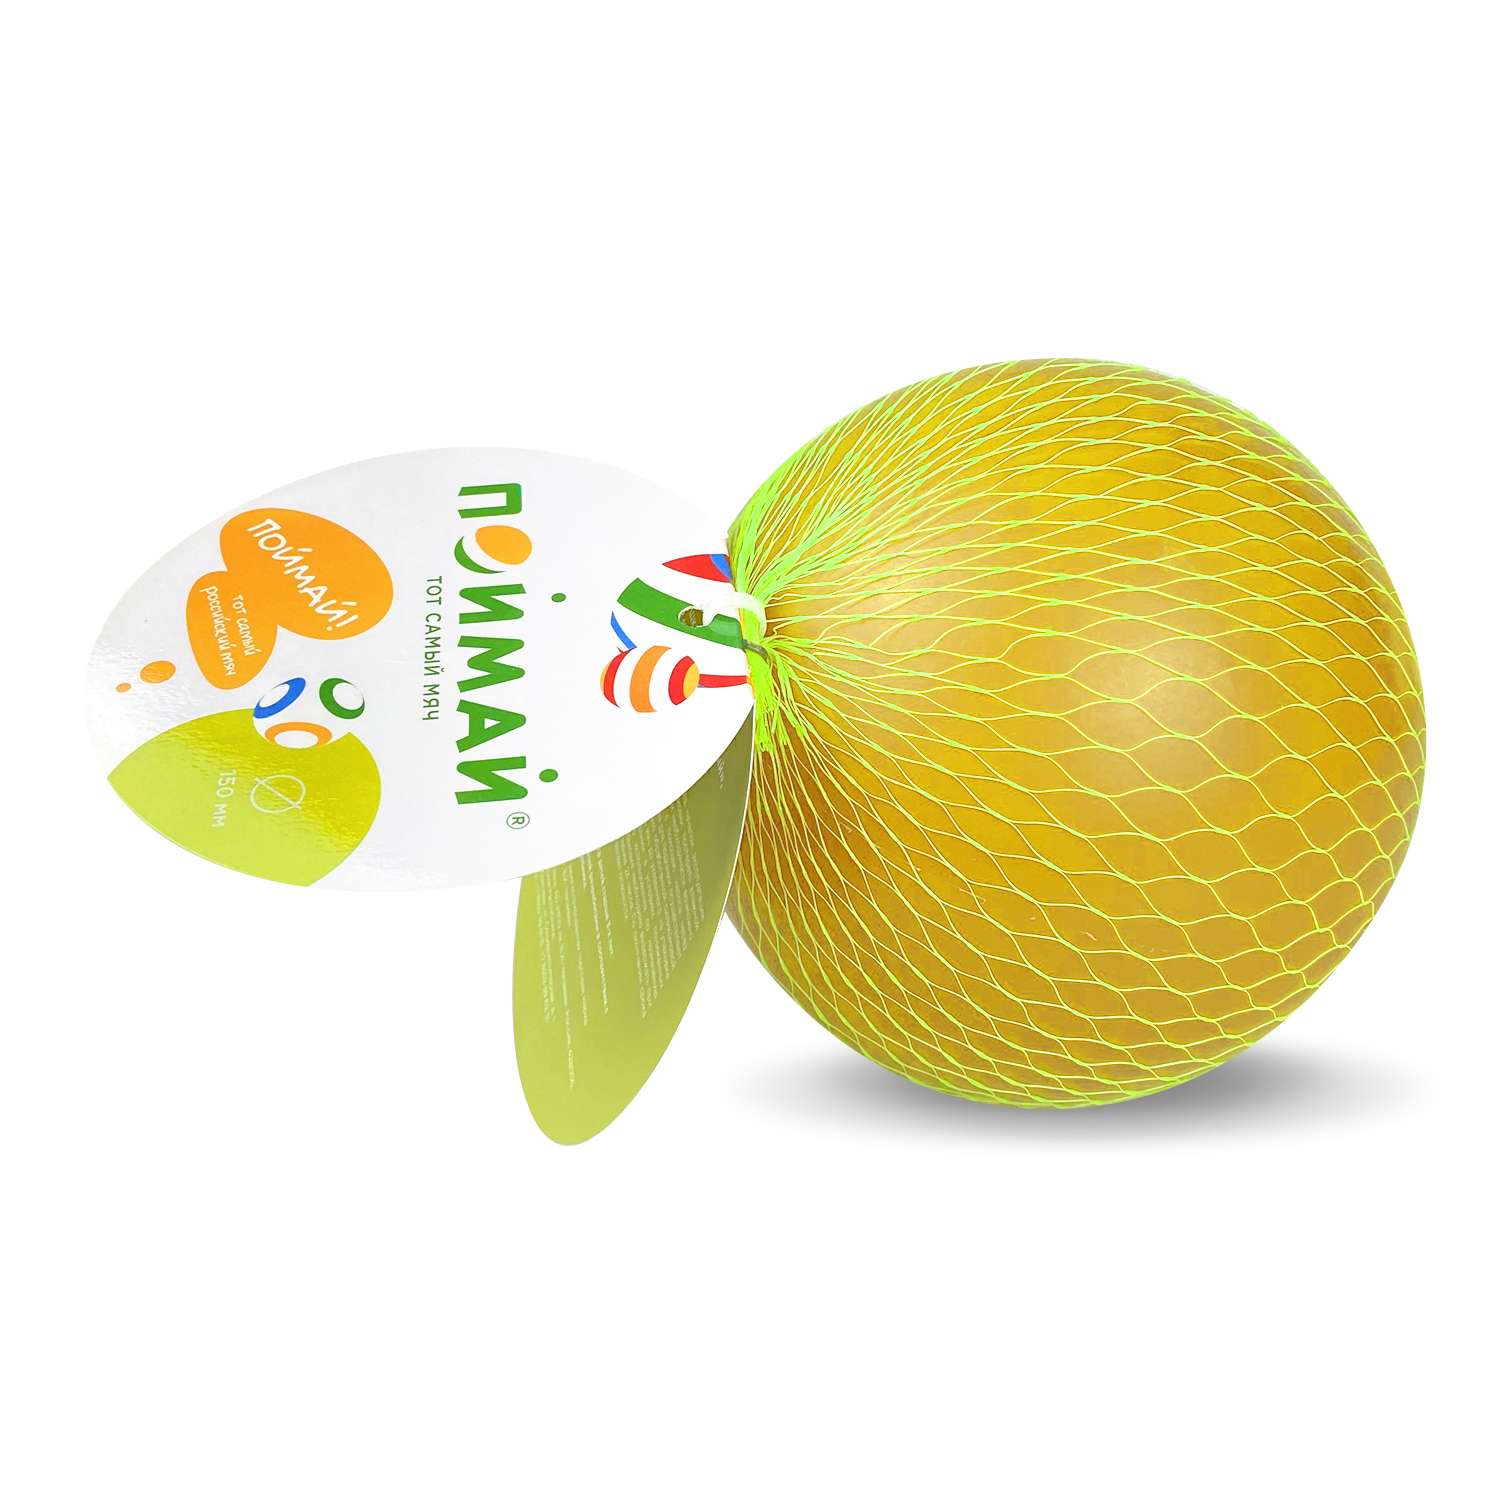 Мяч ПОЙМАЙ диаметр 150мм Радуга желтый - фото 2